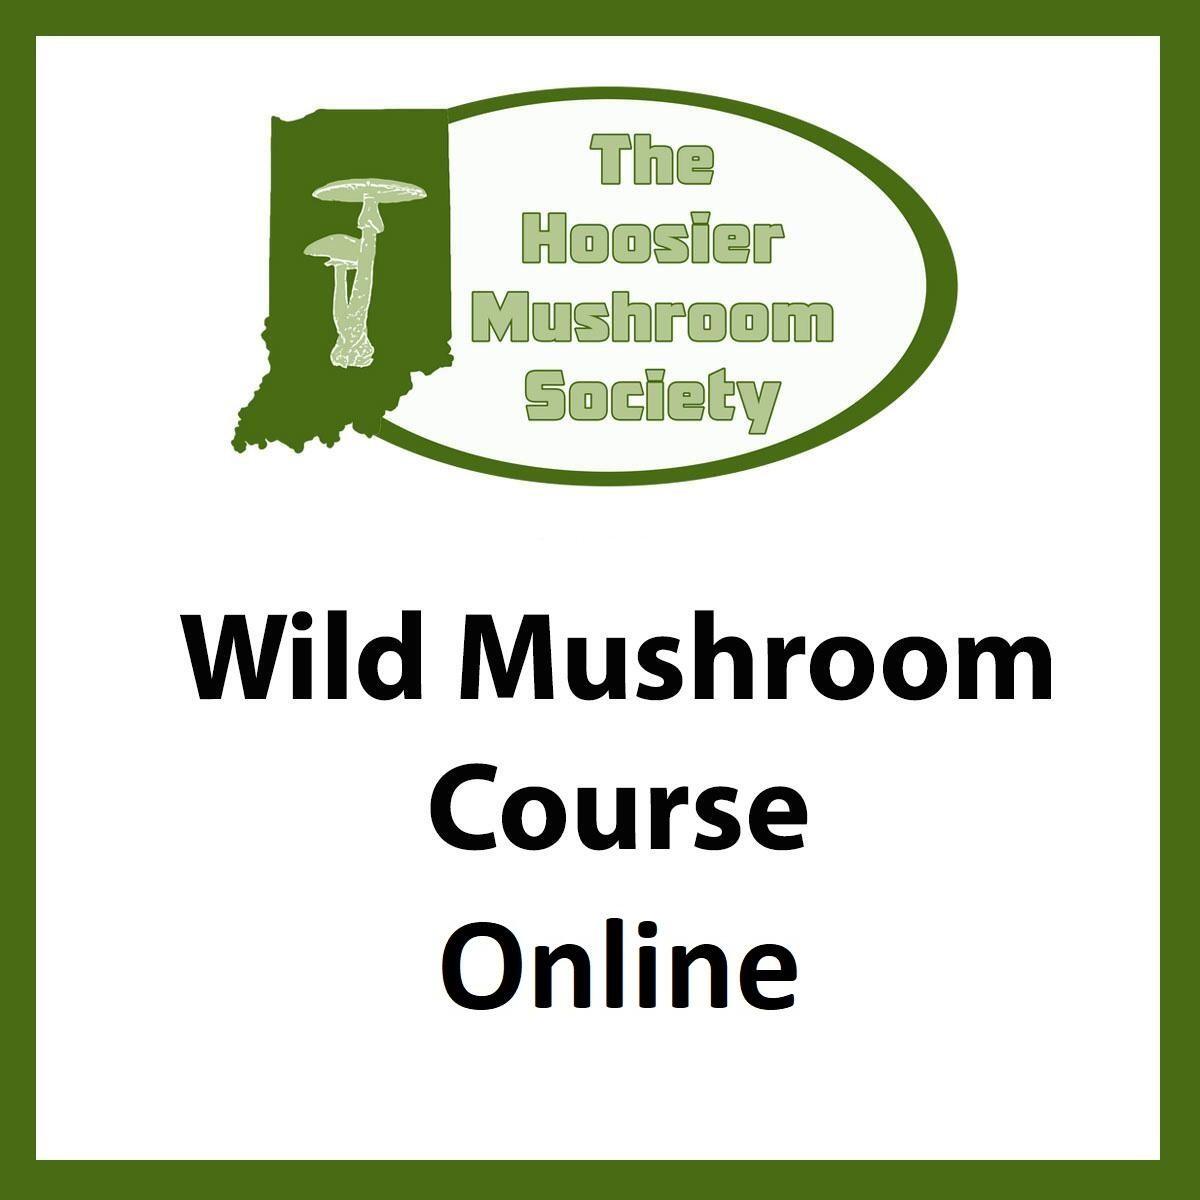 Online Wild Mushroom Course